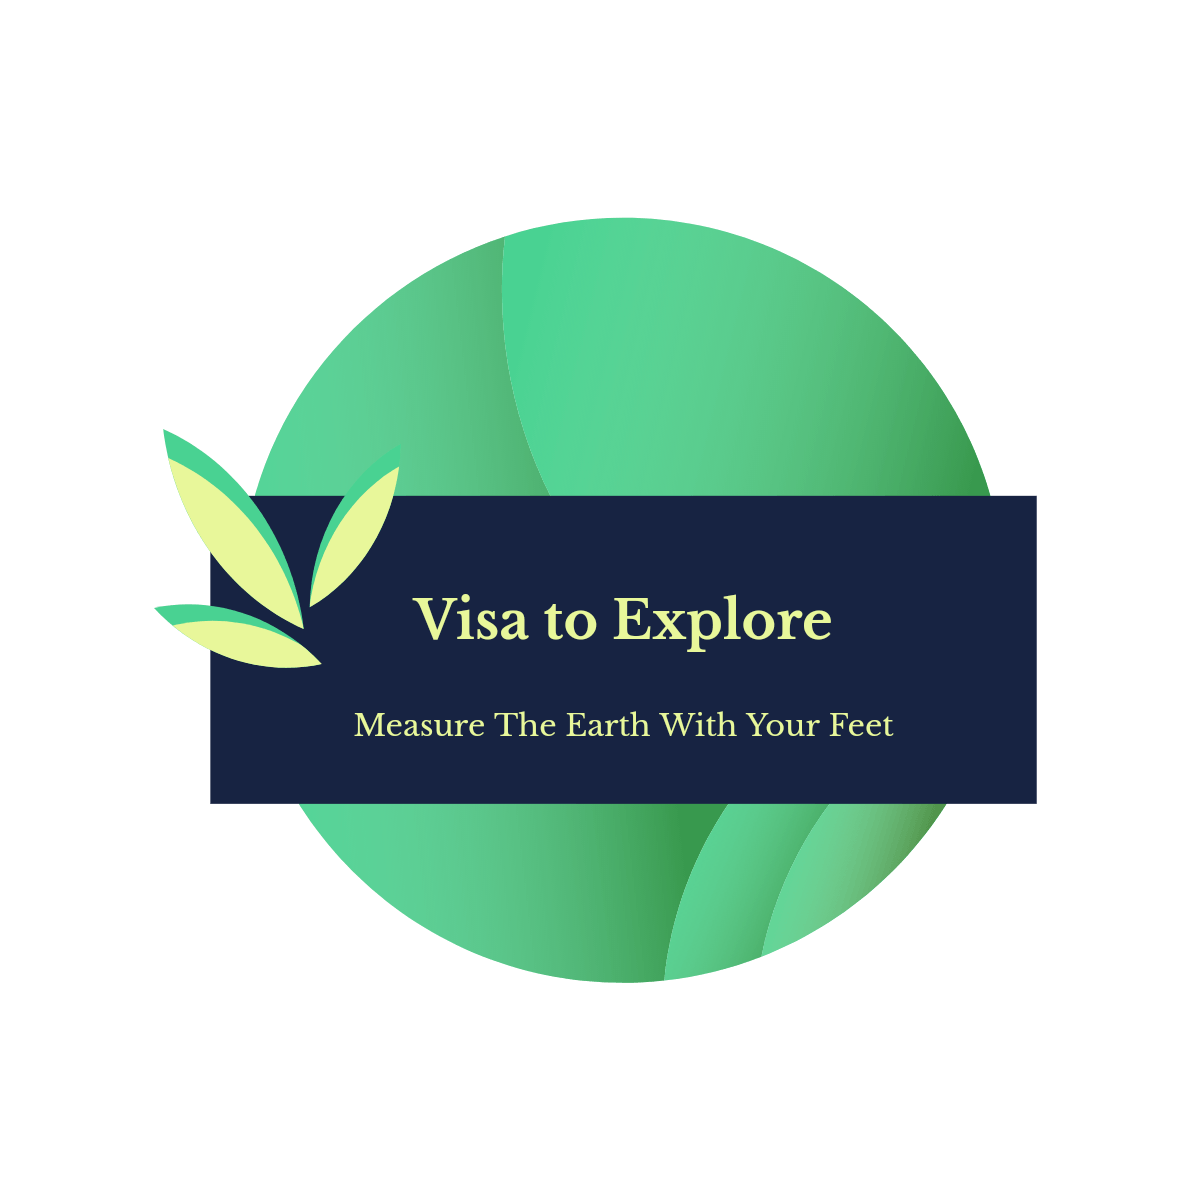 Visa to Explore